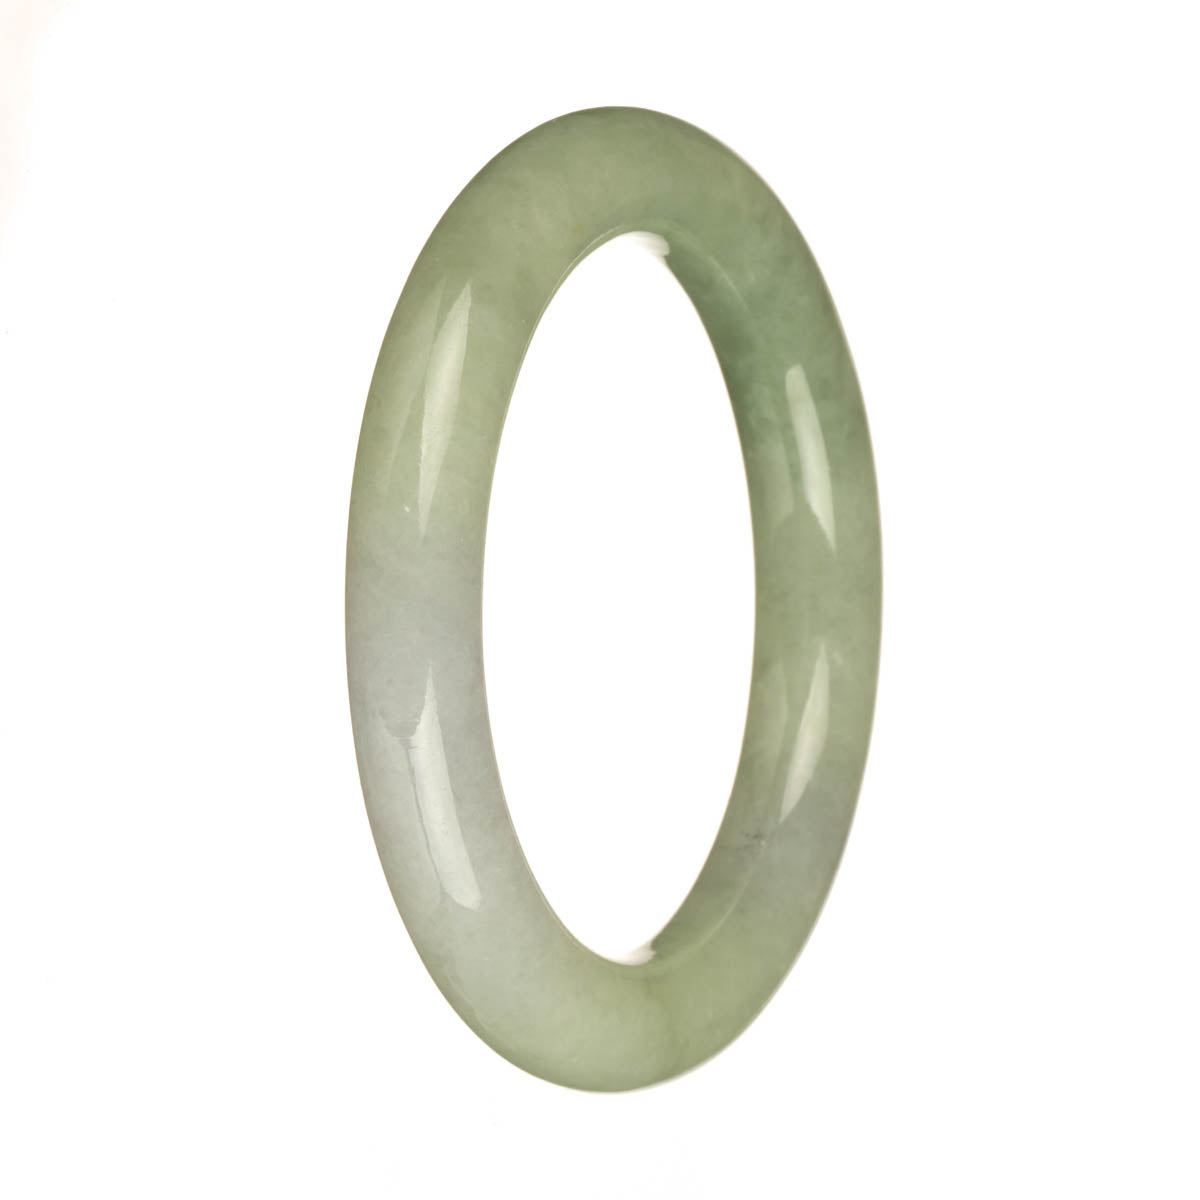 56mm White and Green Jade Bangle Bracelet